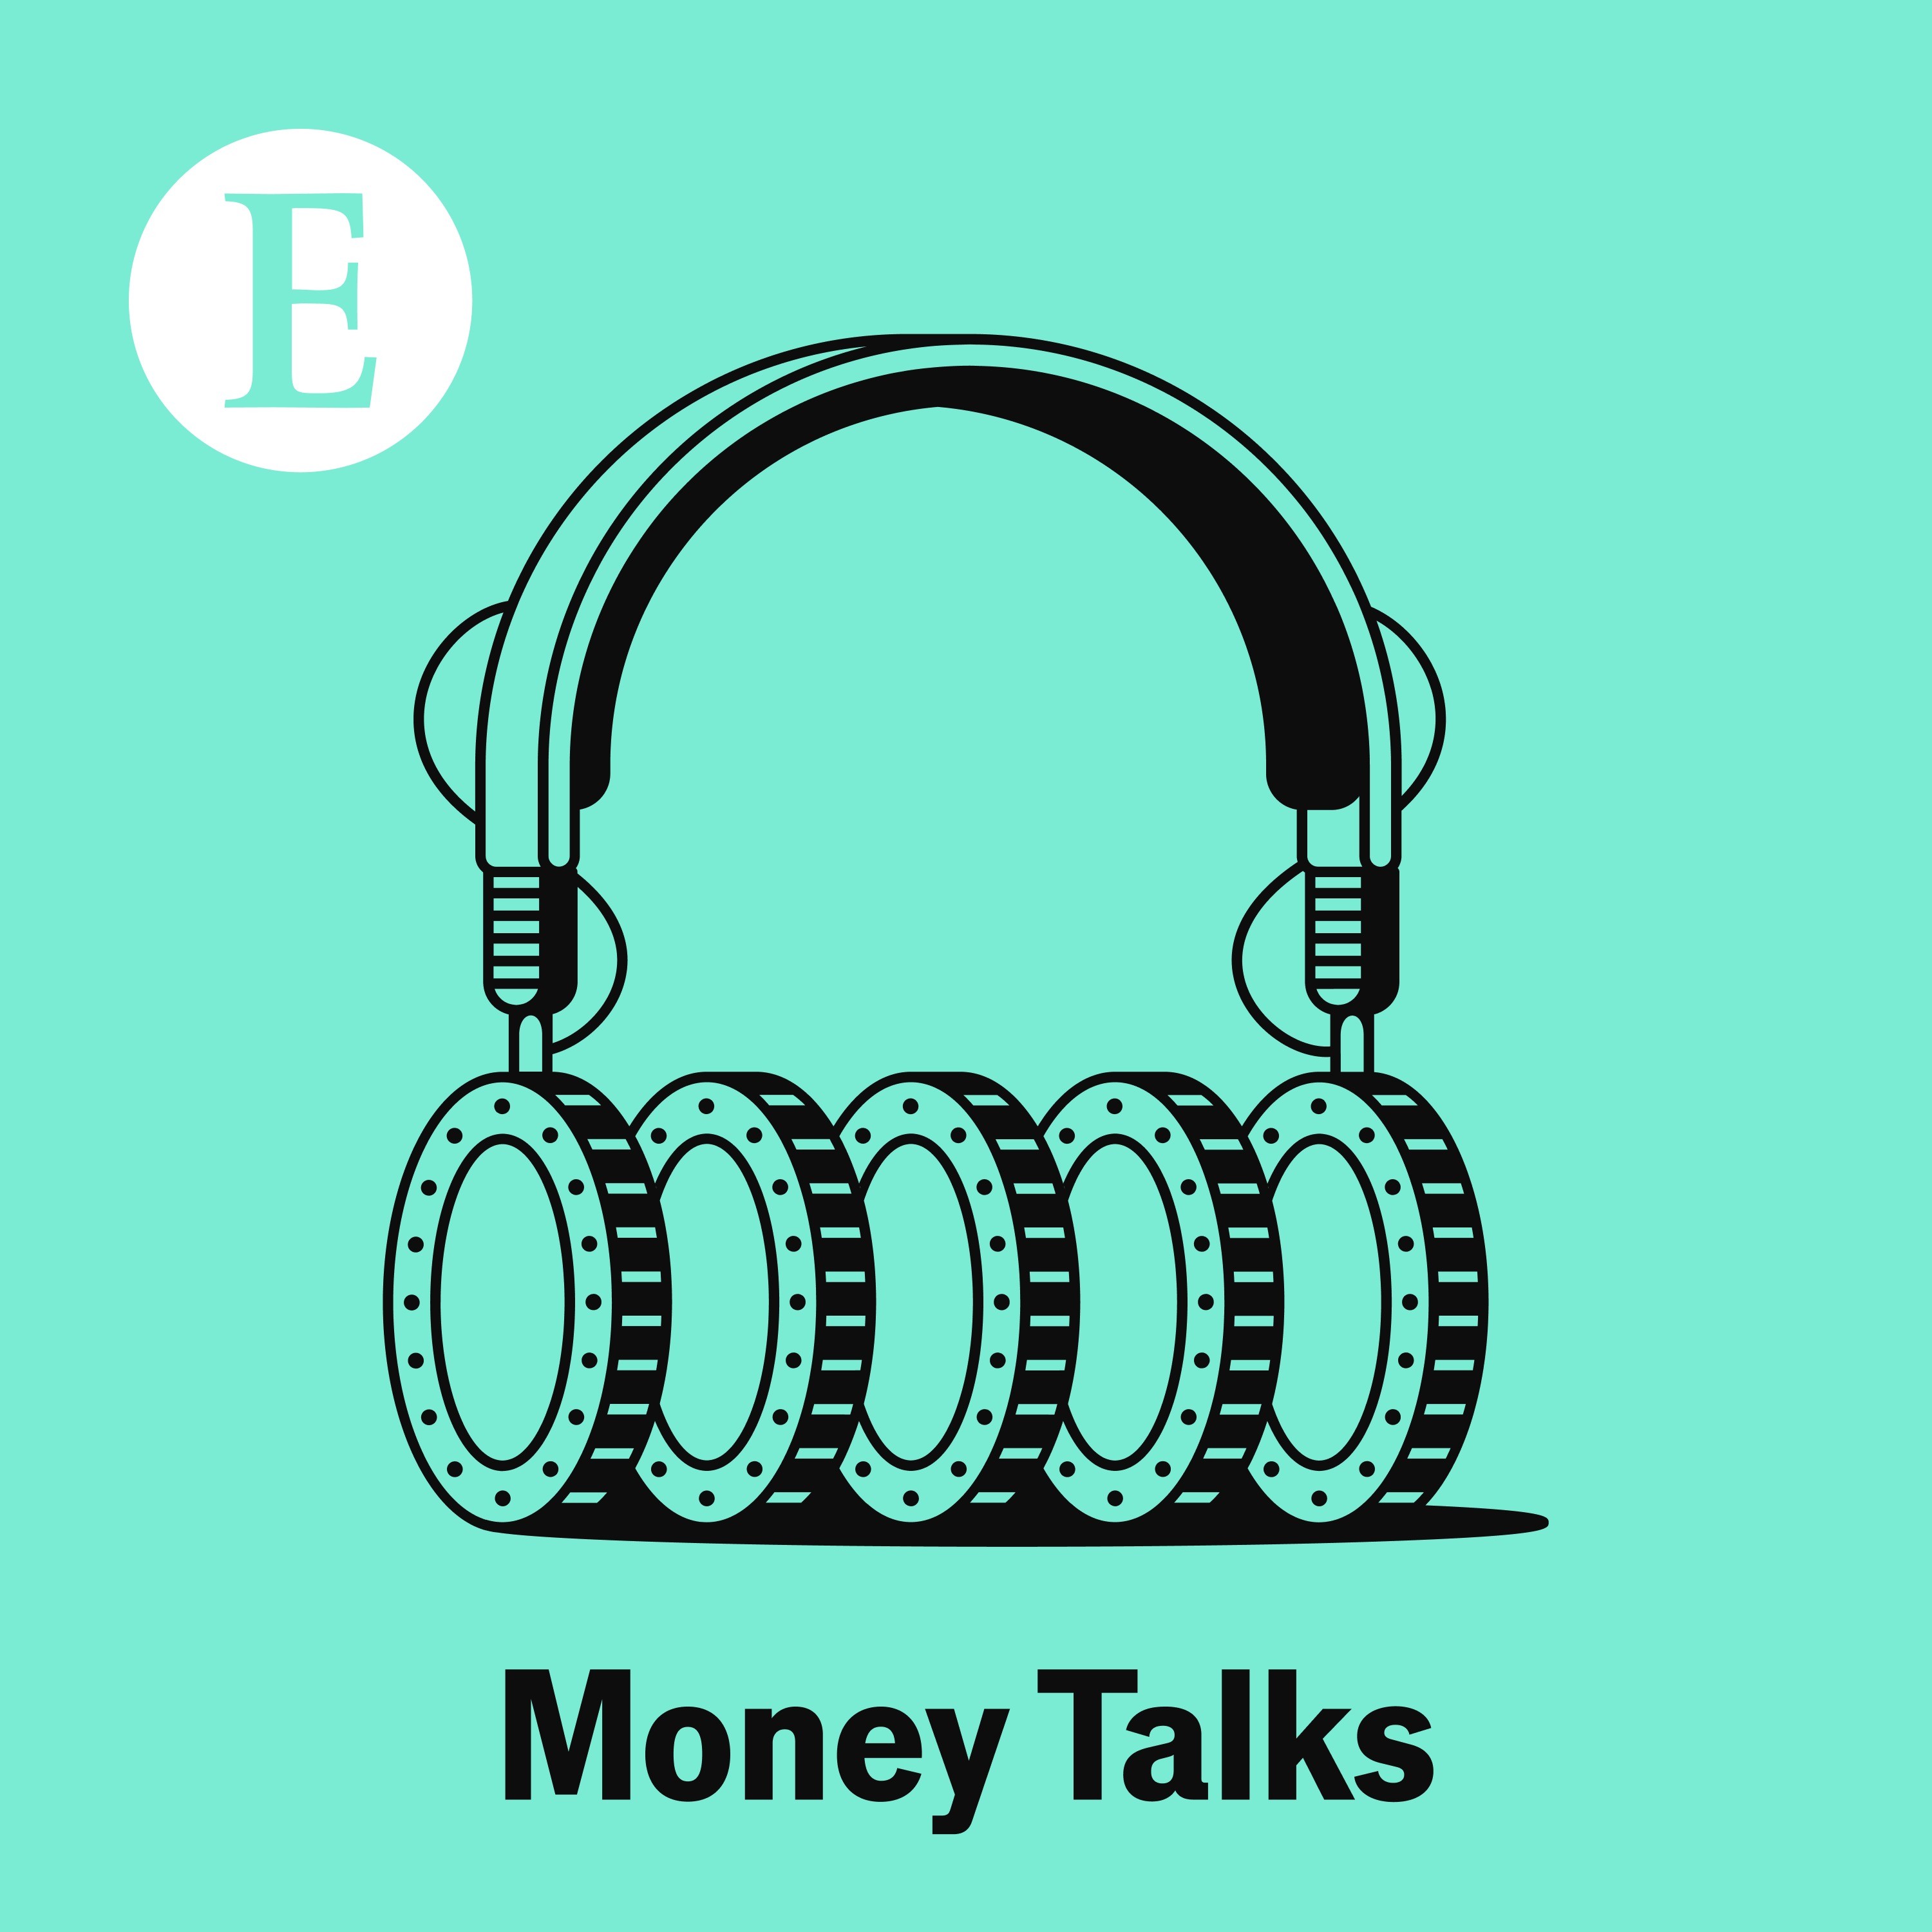 Money Talks from The Economist podcast